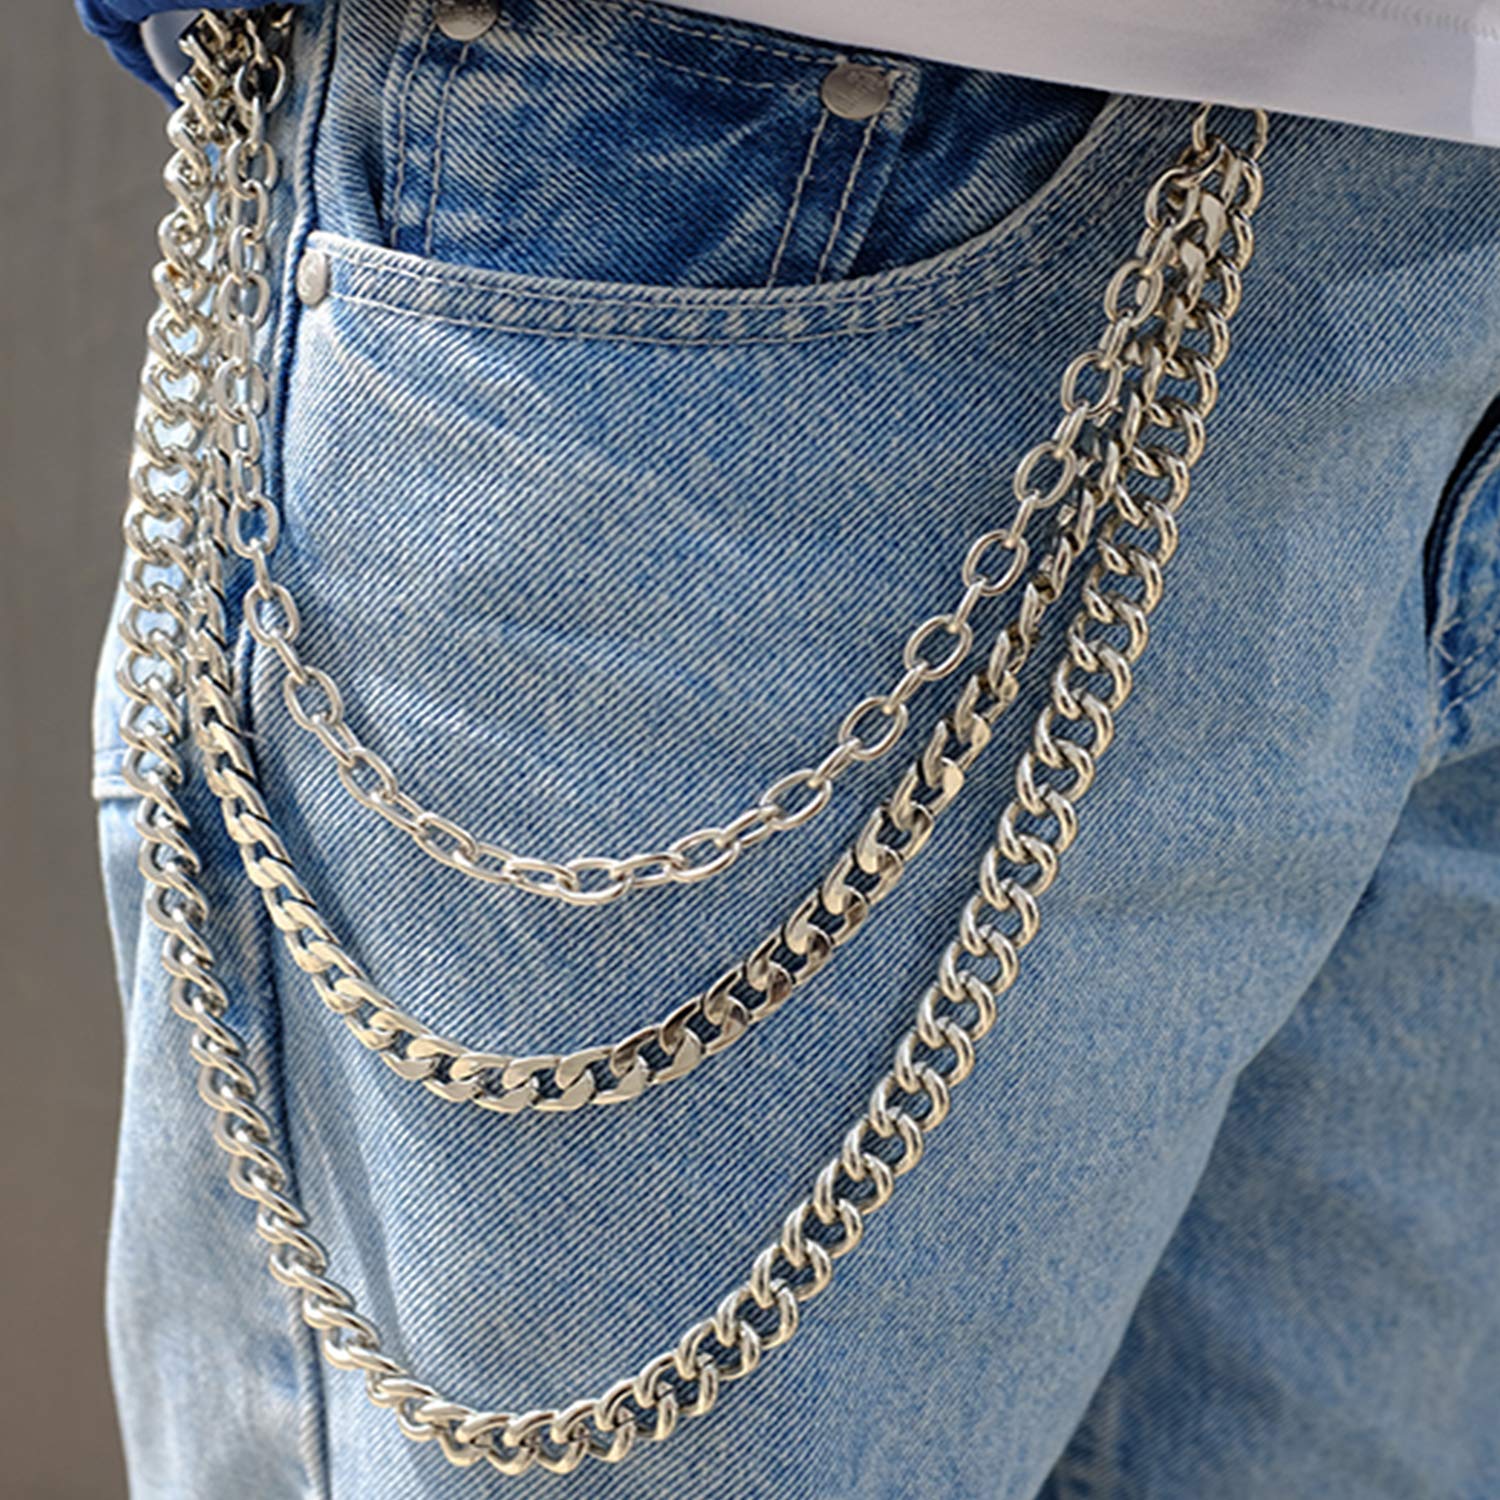 Lainrrew Trousers Chain, Pants Chain Belt Chain Wallet Chain Pocket Chain Hip Hop Punk Jeans Chain Key Chain Goth Accessories for Eboy Egirl Women Men (Style 1)